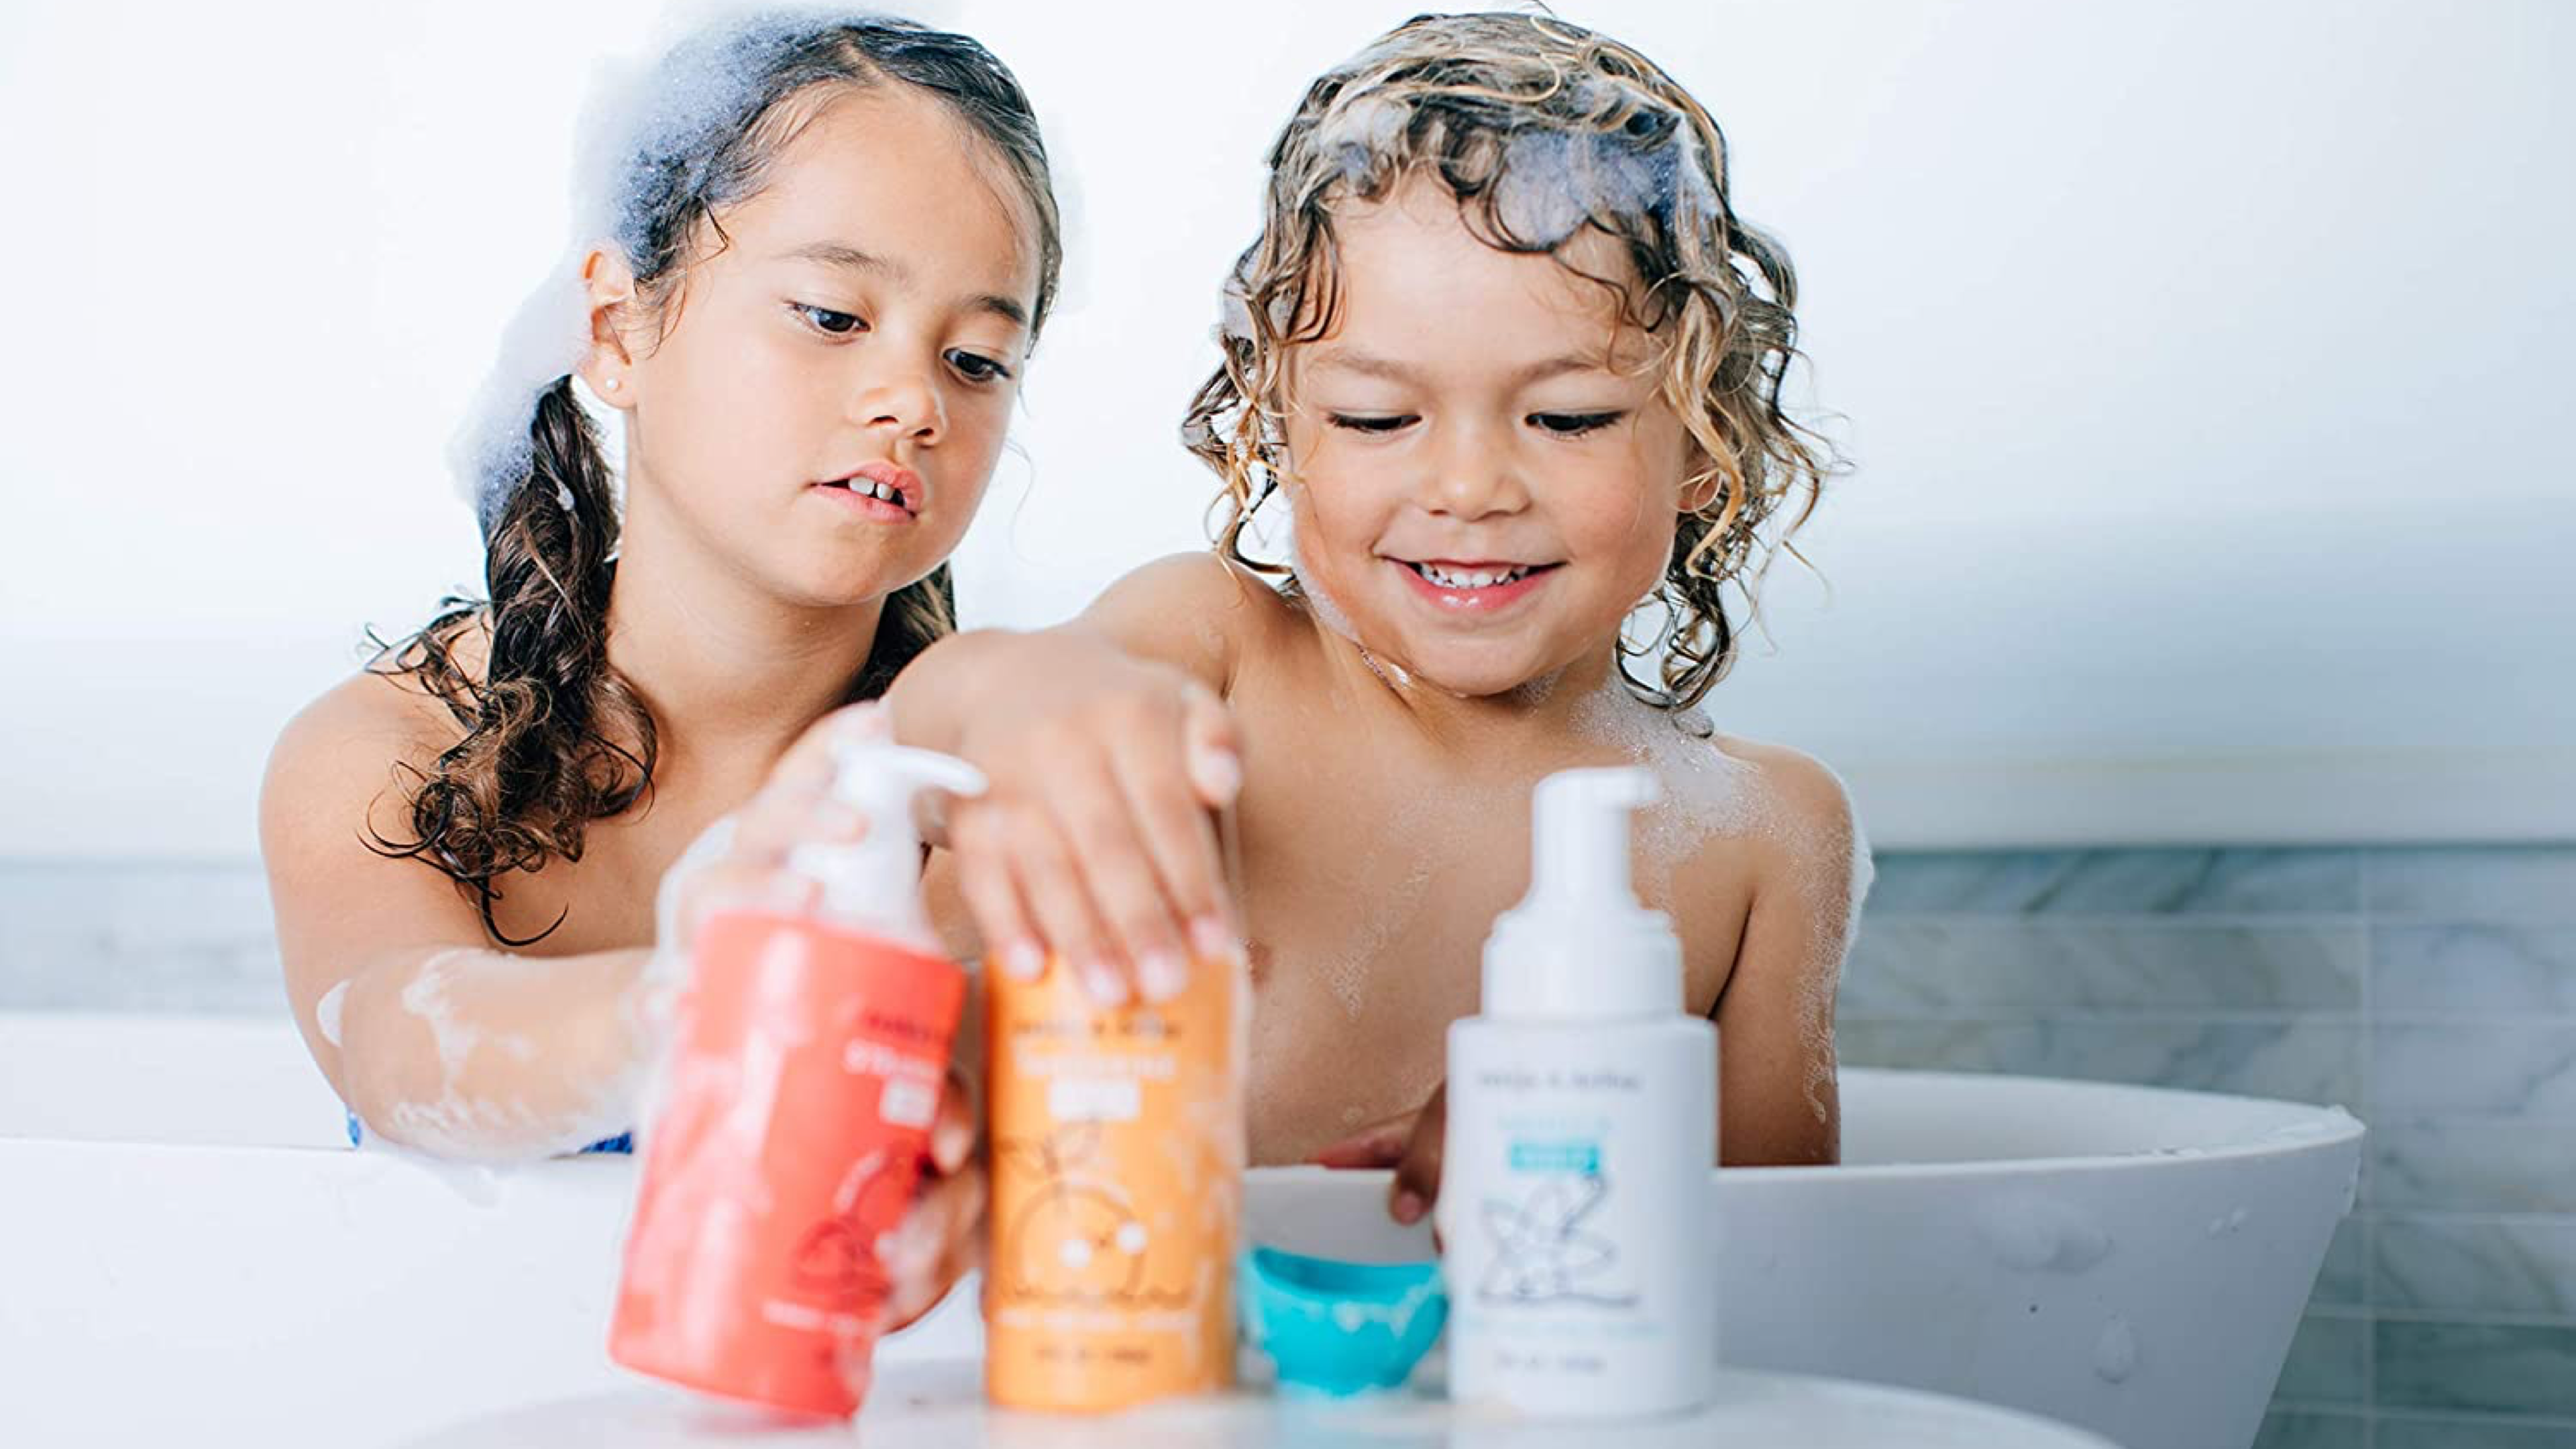 tear-free shampoo, body wash, and bubble bath for kids